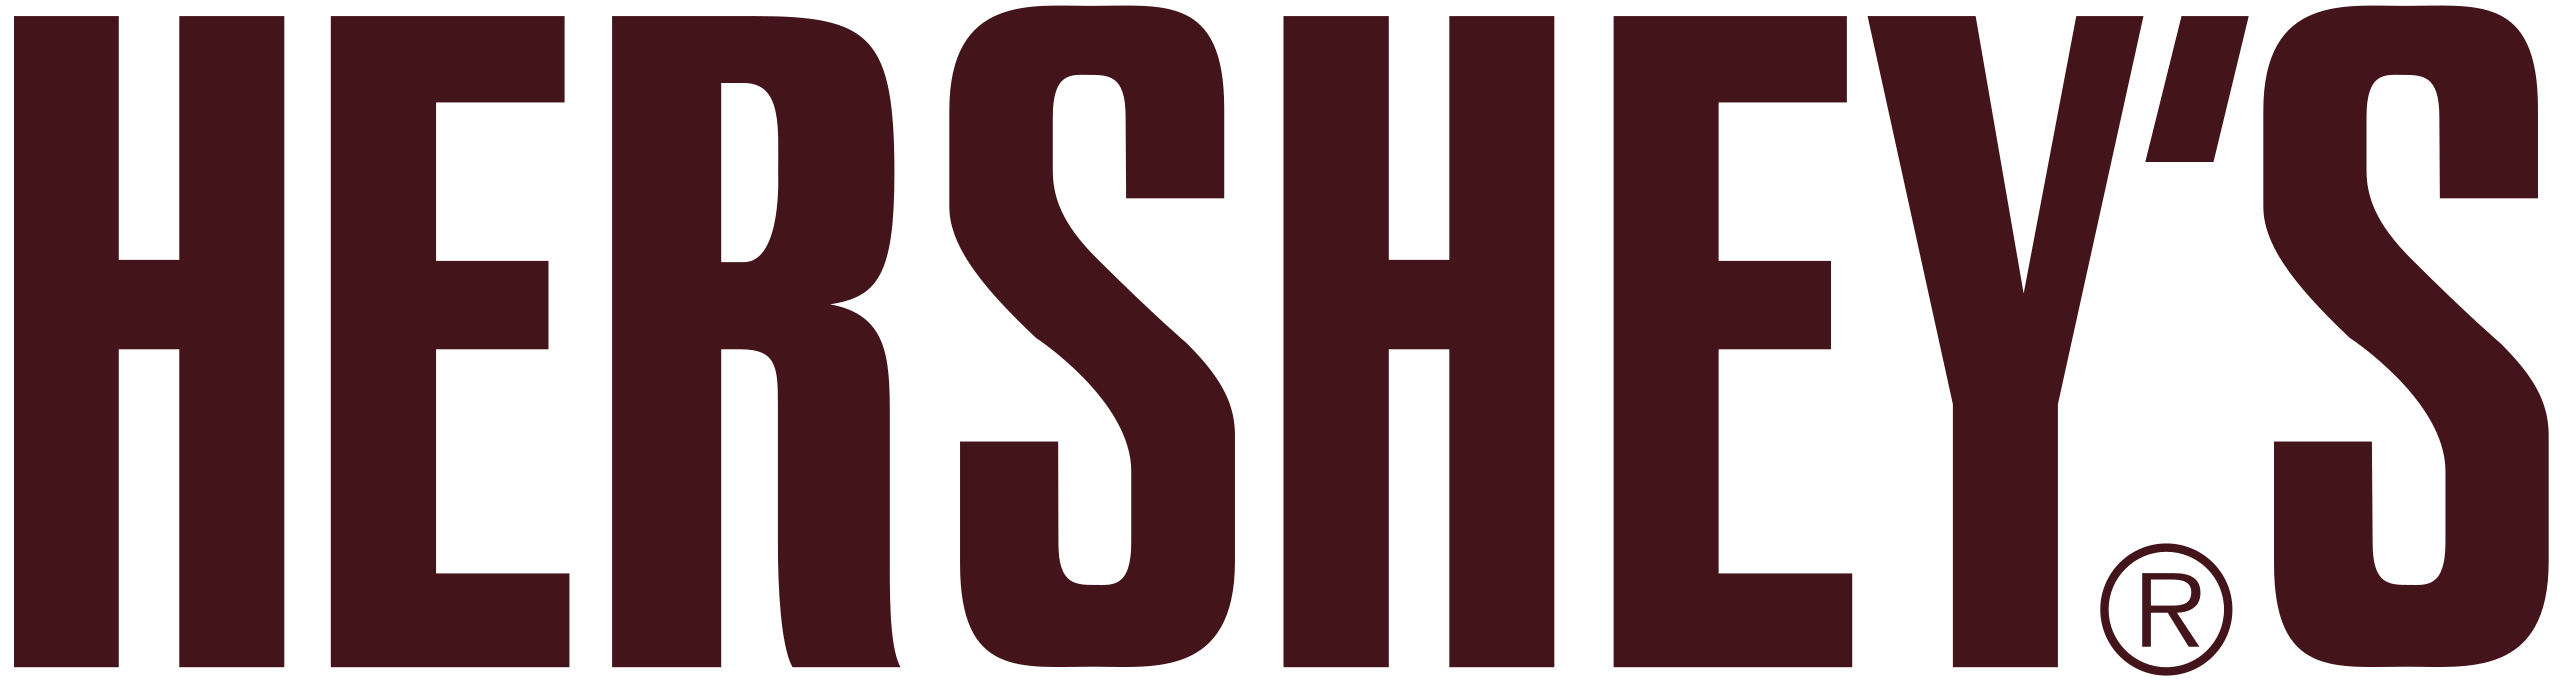 Hershey Logo PNG Photo